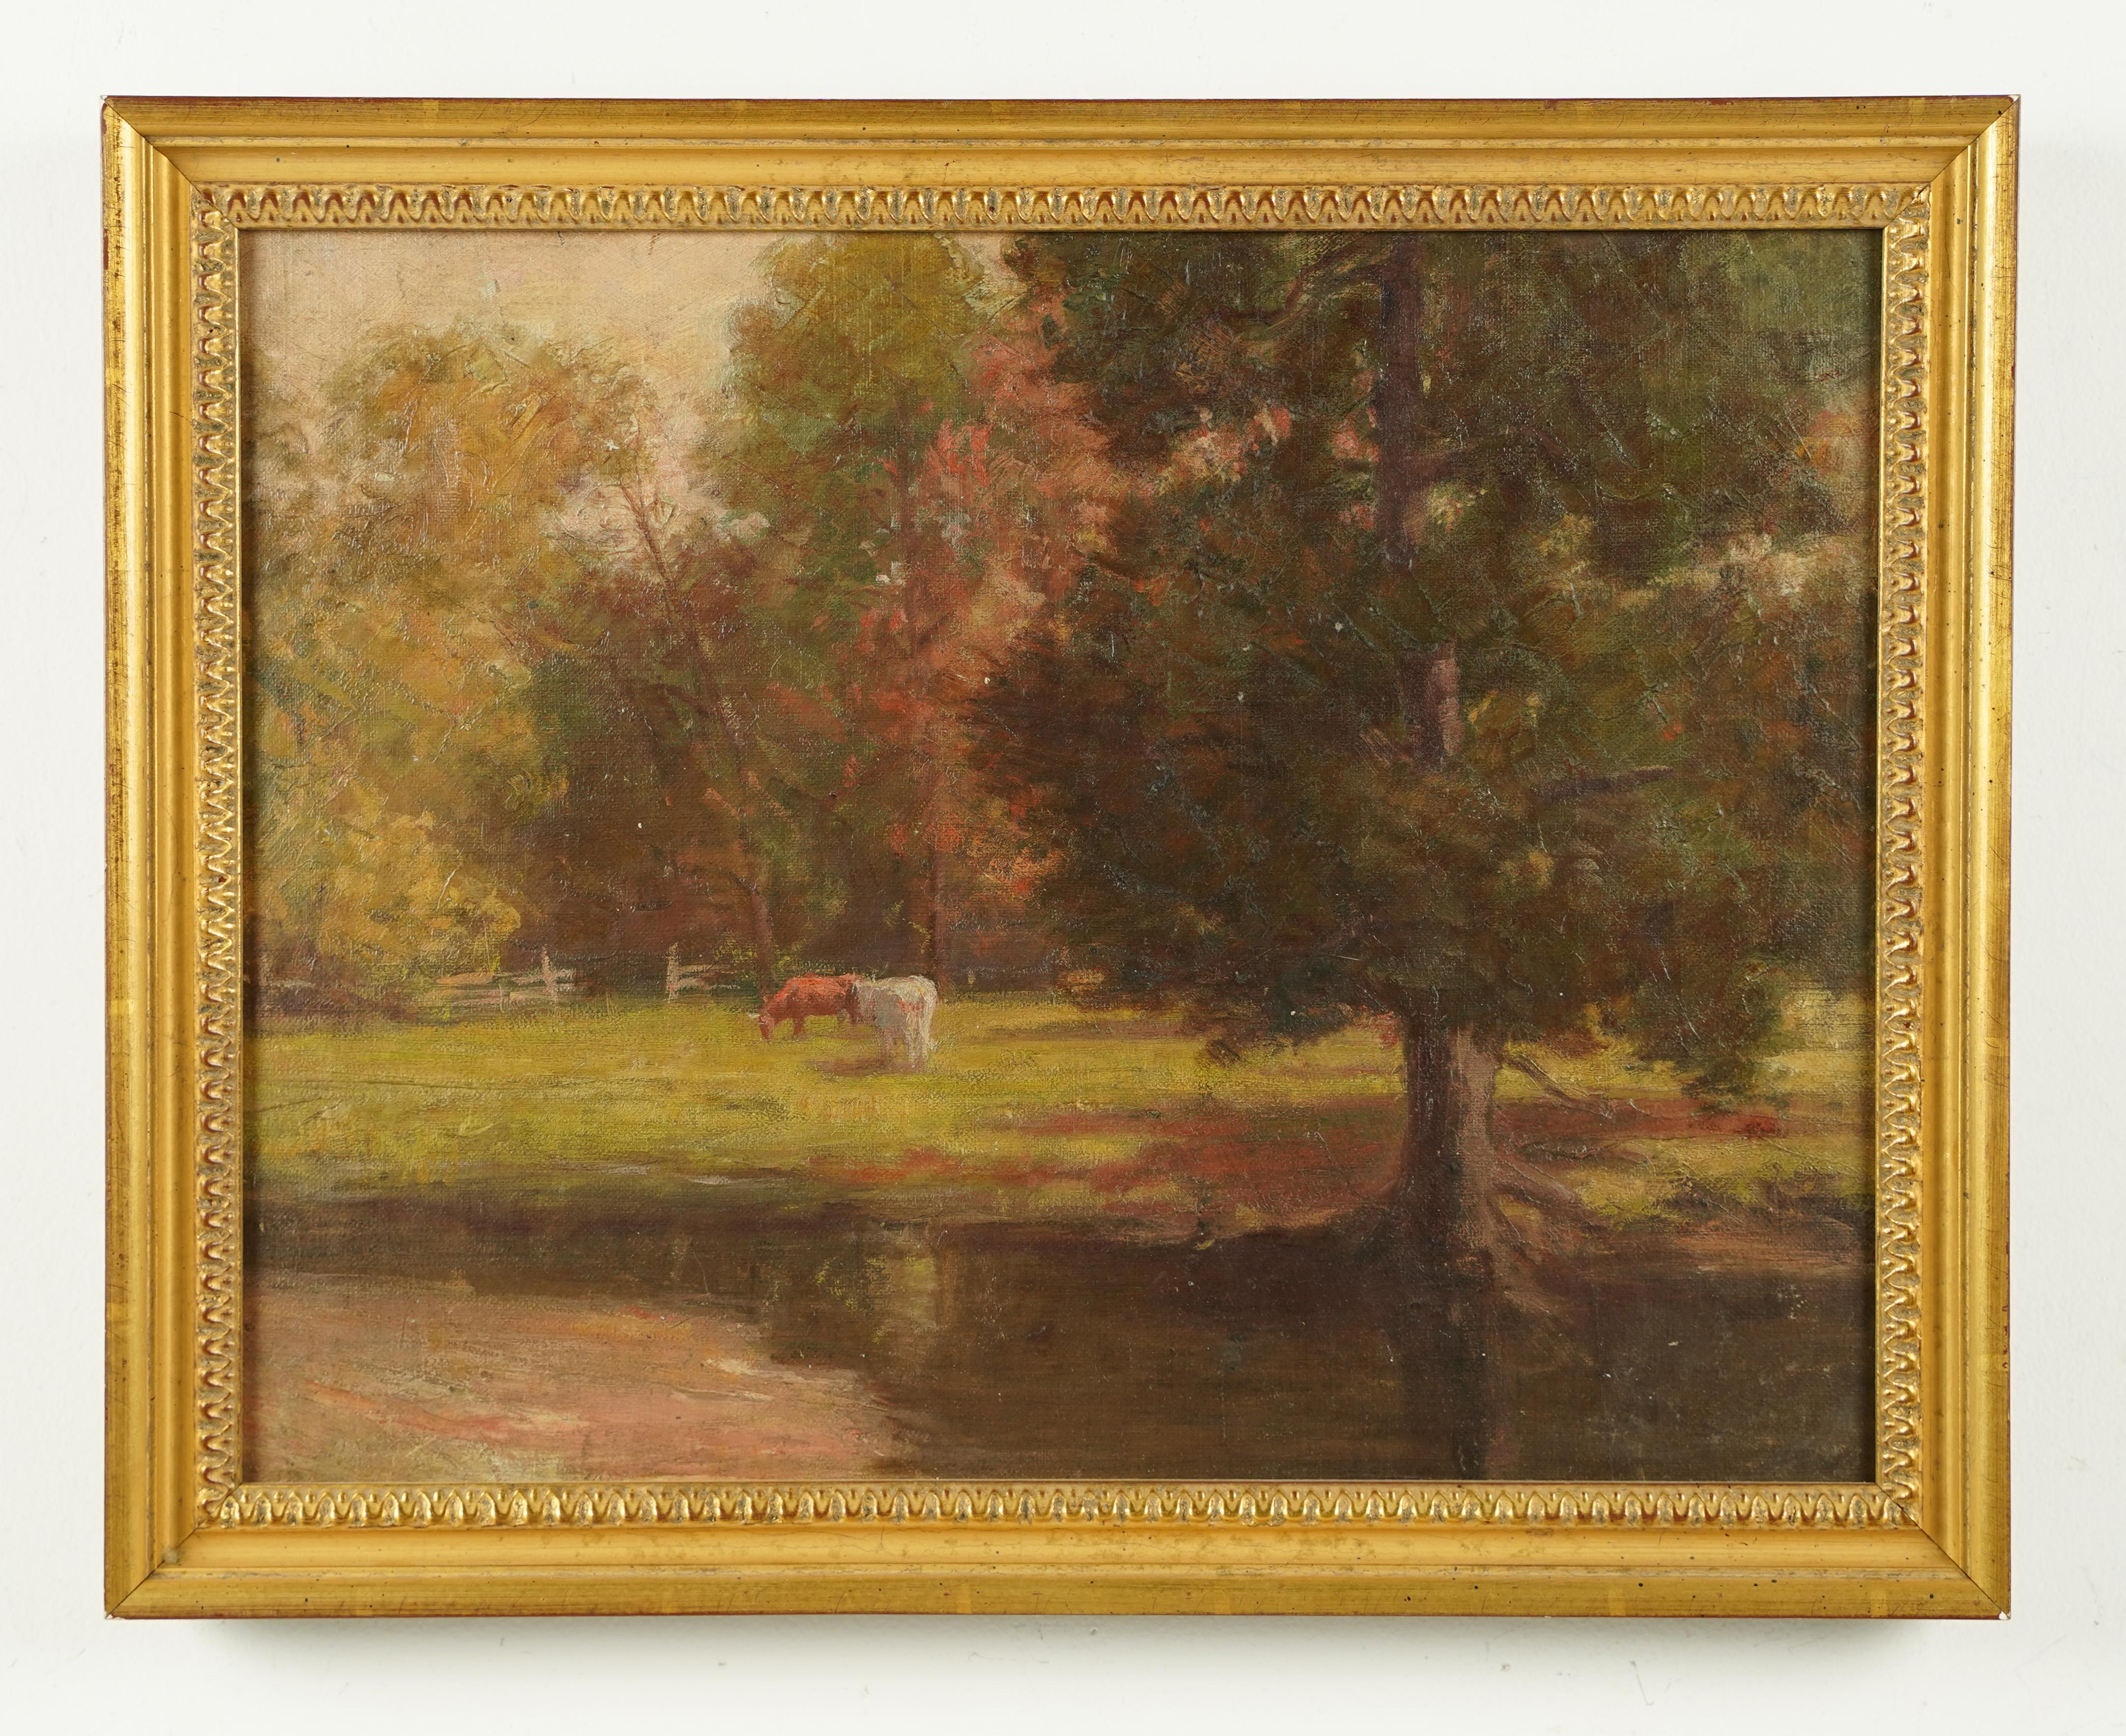 Antique American impressionist landscape oil painting.  Oil on board.  Signed.  Framed.  Image size, 17L x 13H.